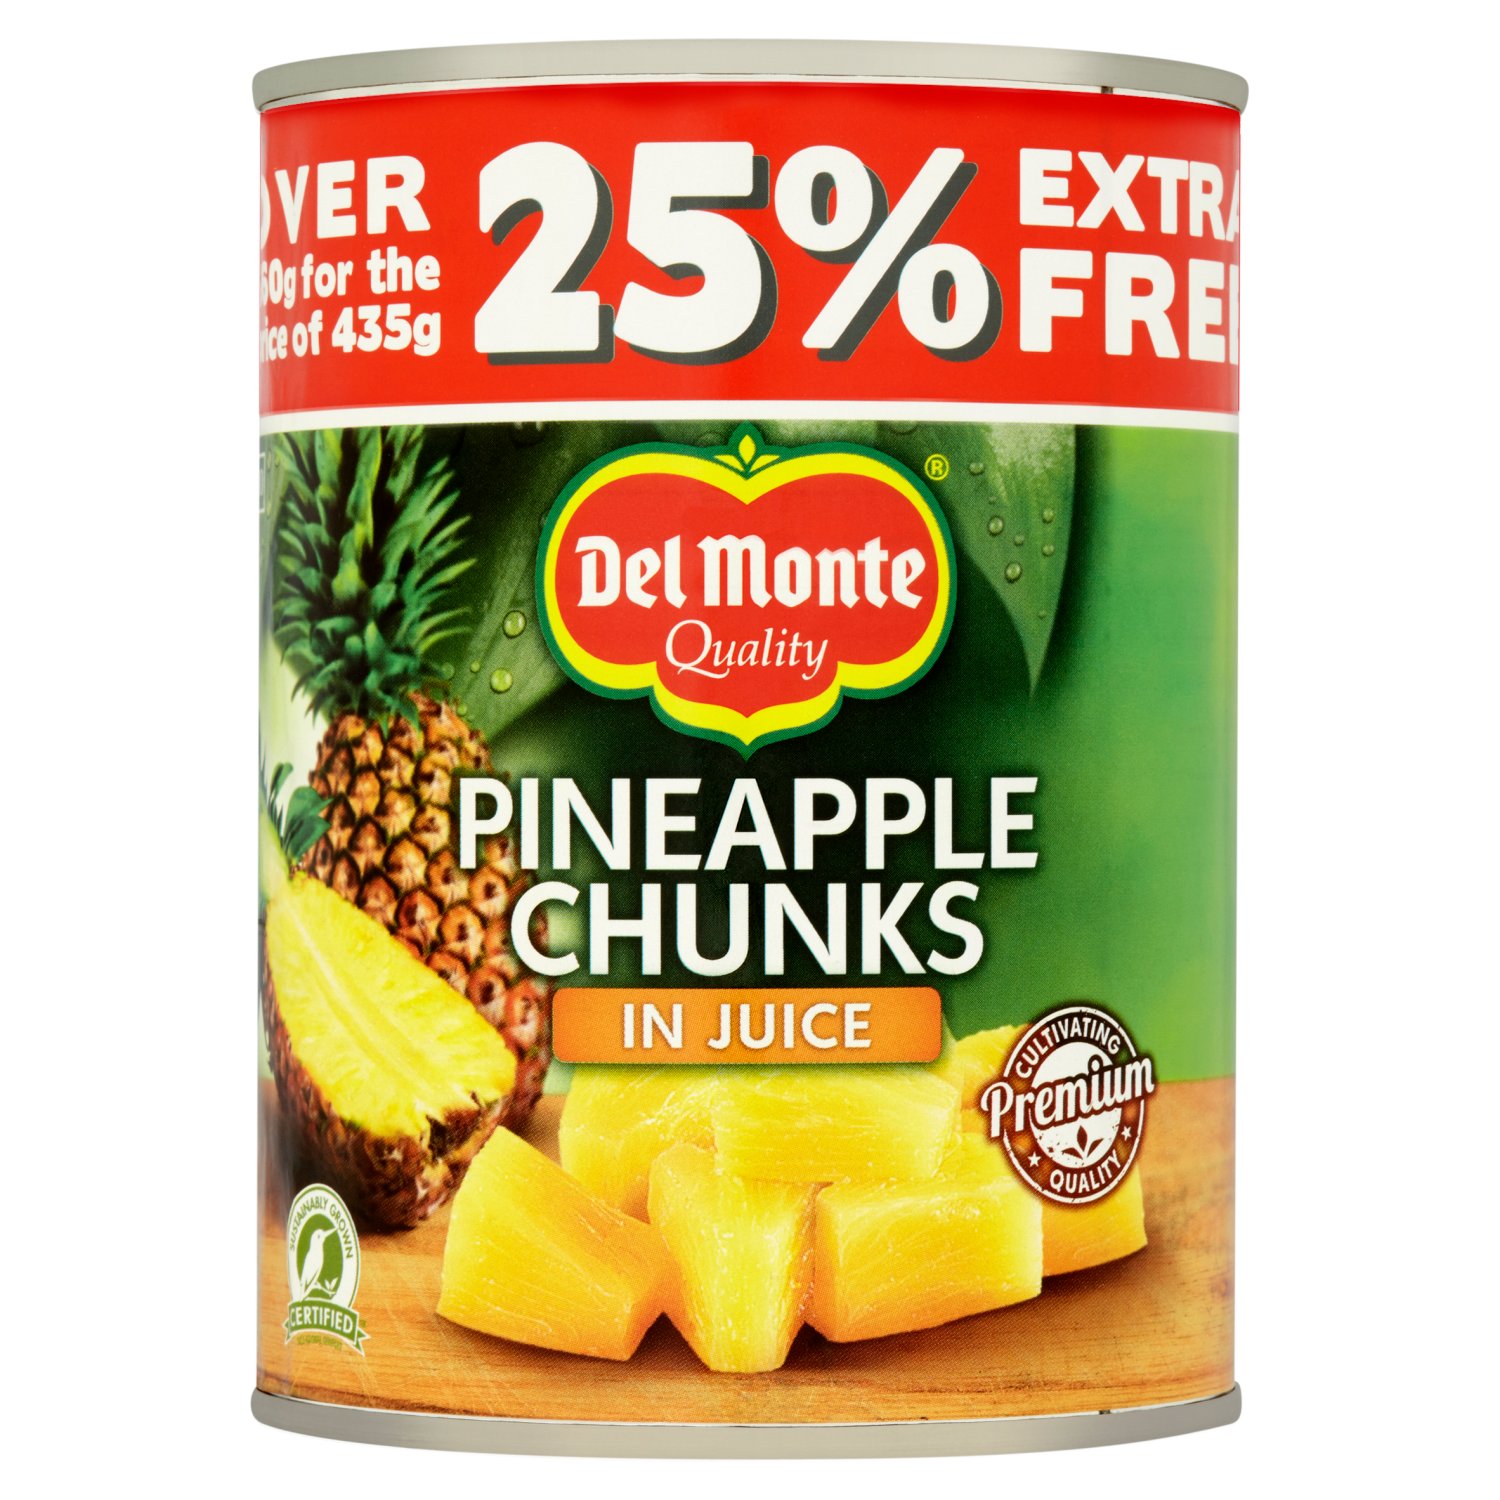 Delmonte Pineapple Chunks 25% Extra Free (560 g)